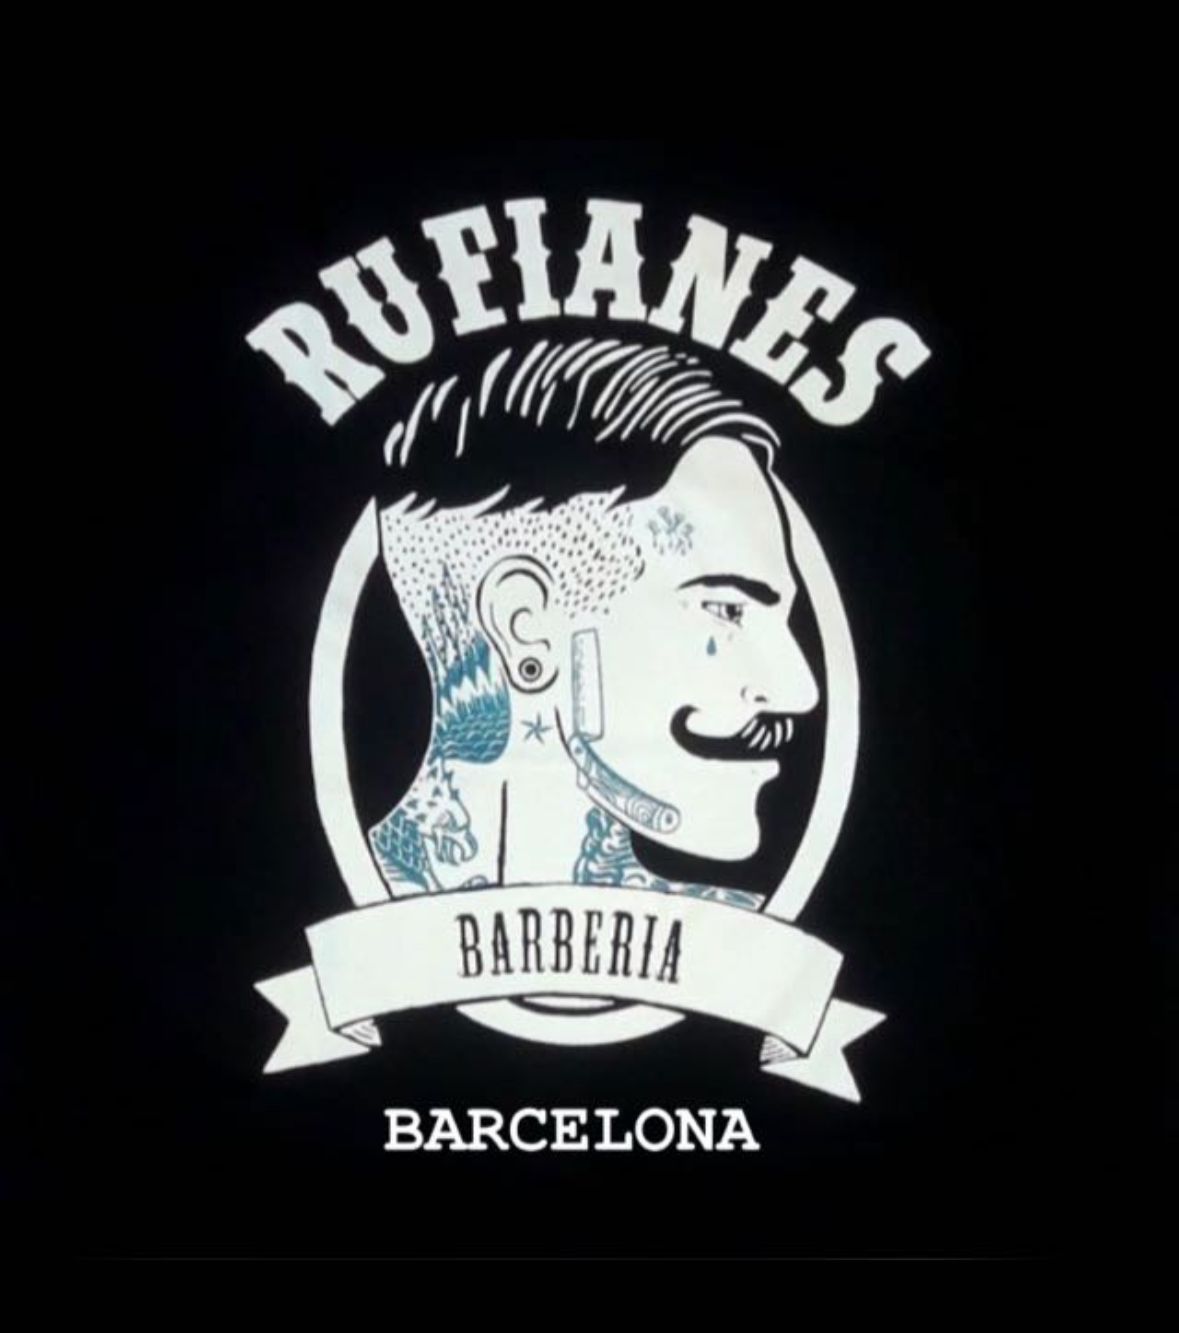 Rufianes Barberia i Tattoo Barcelona